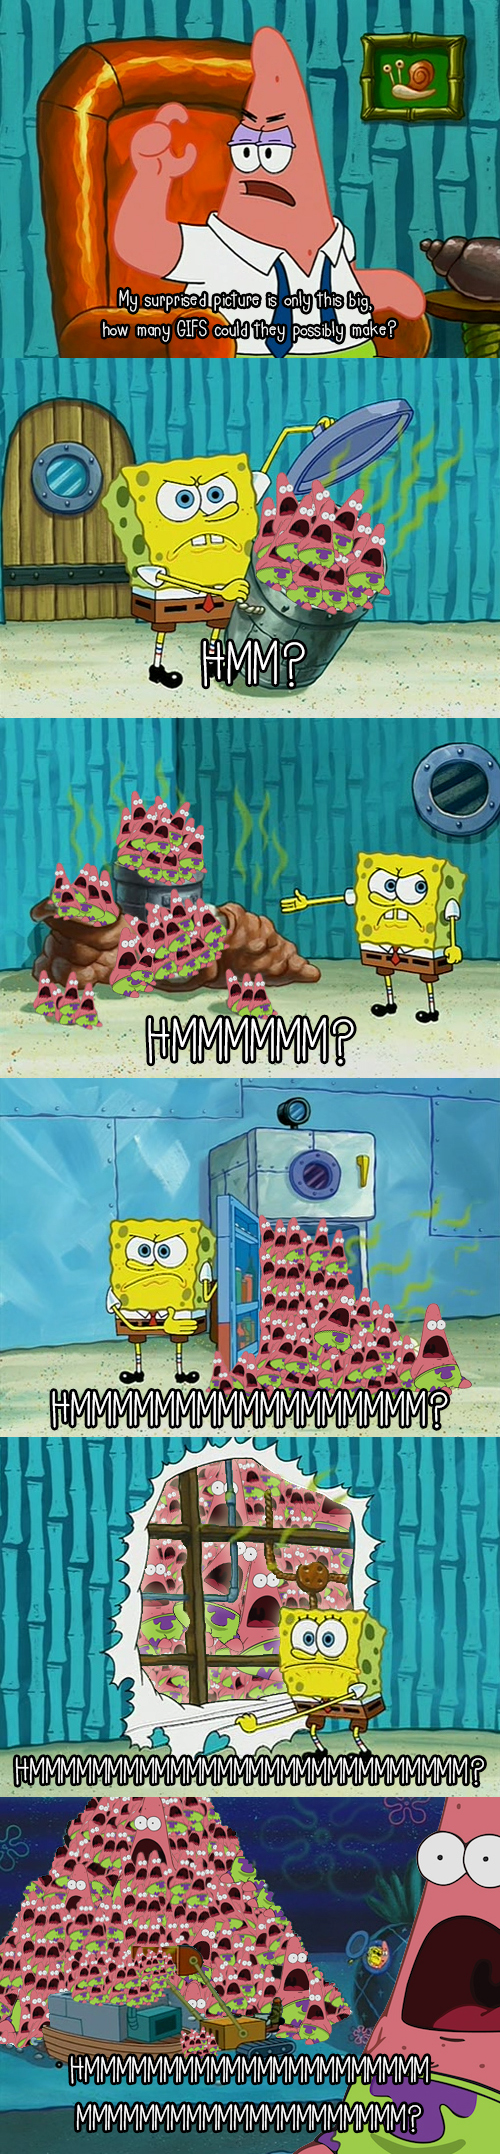 Spongebob about Patrick on the internet